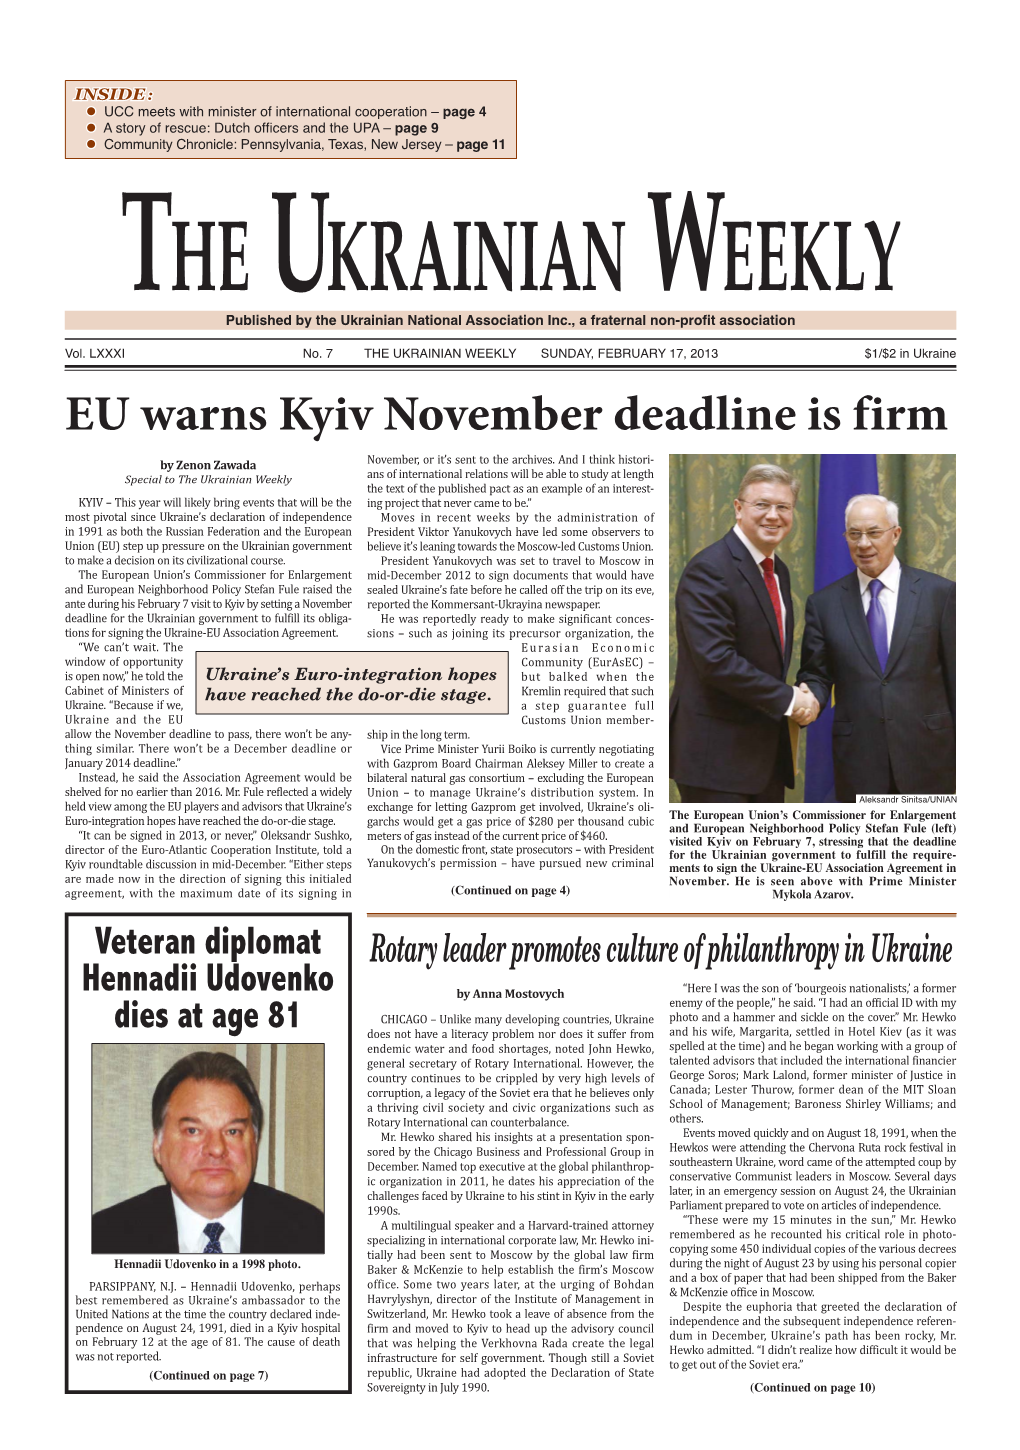 The Ukrainian Weekly 2013, No.7